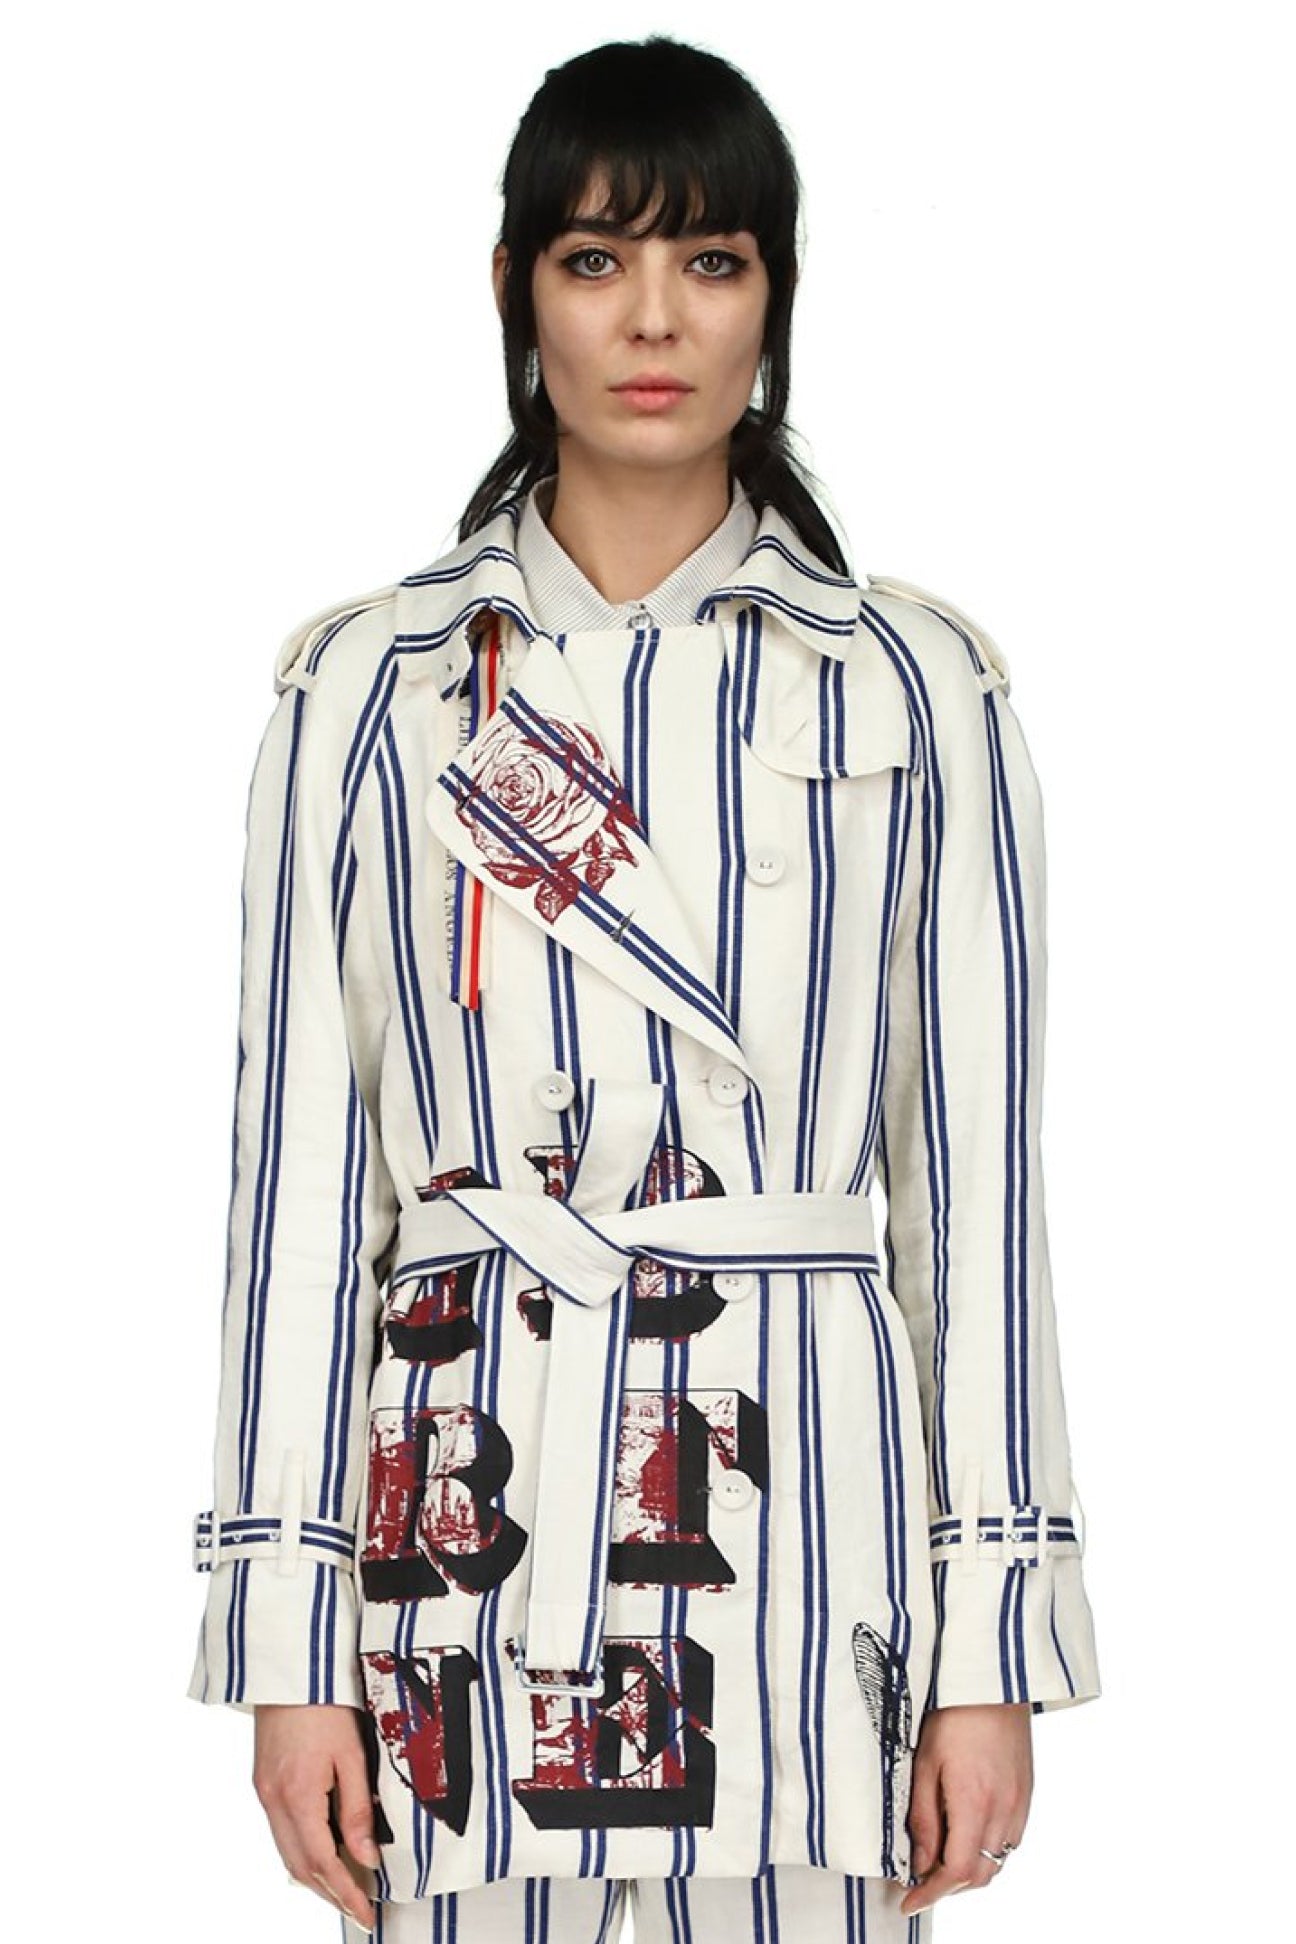 Silk Screen Melange Vintage French Ticking Stripe Trench - Women's Jackets & Coats - Libertine